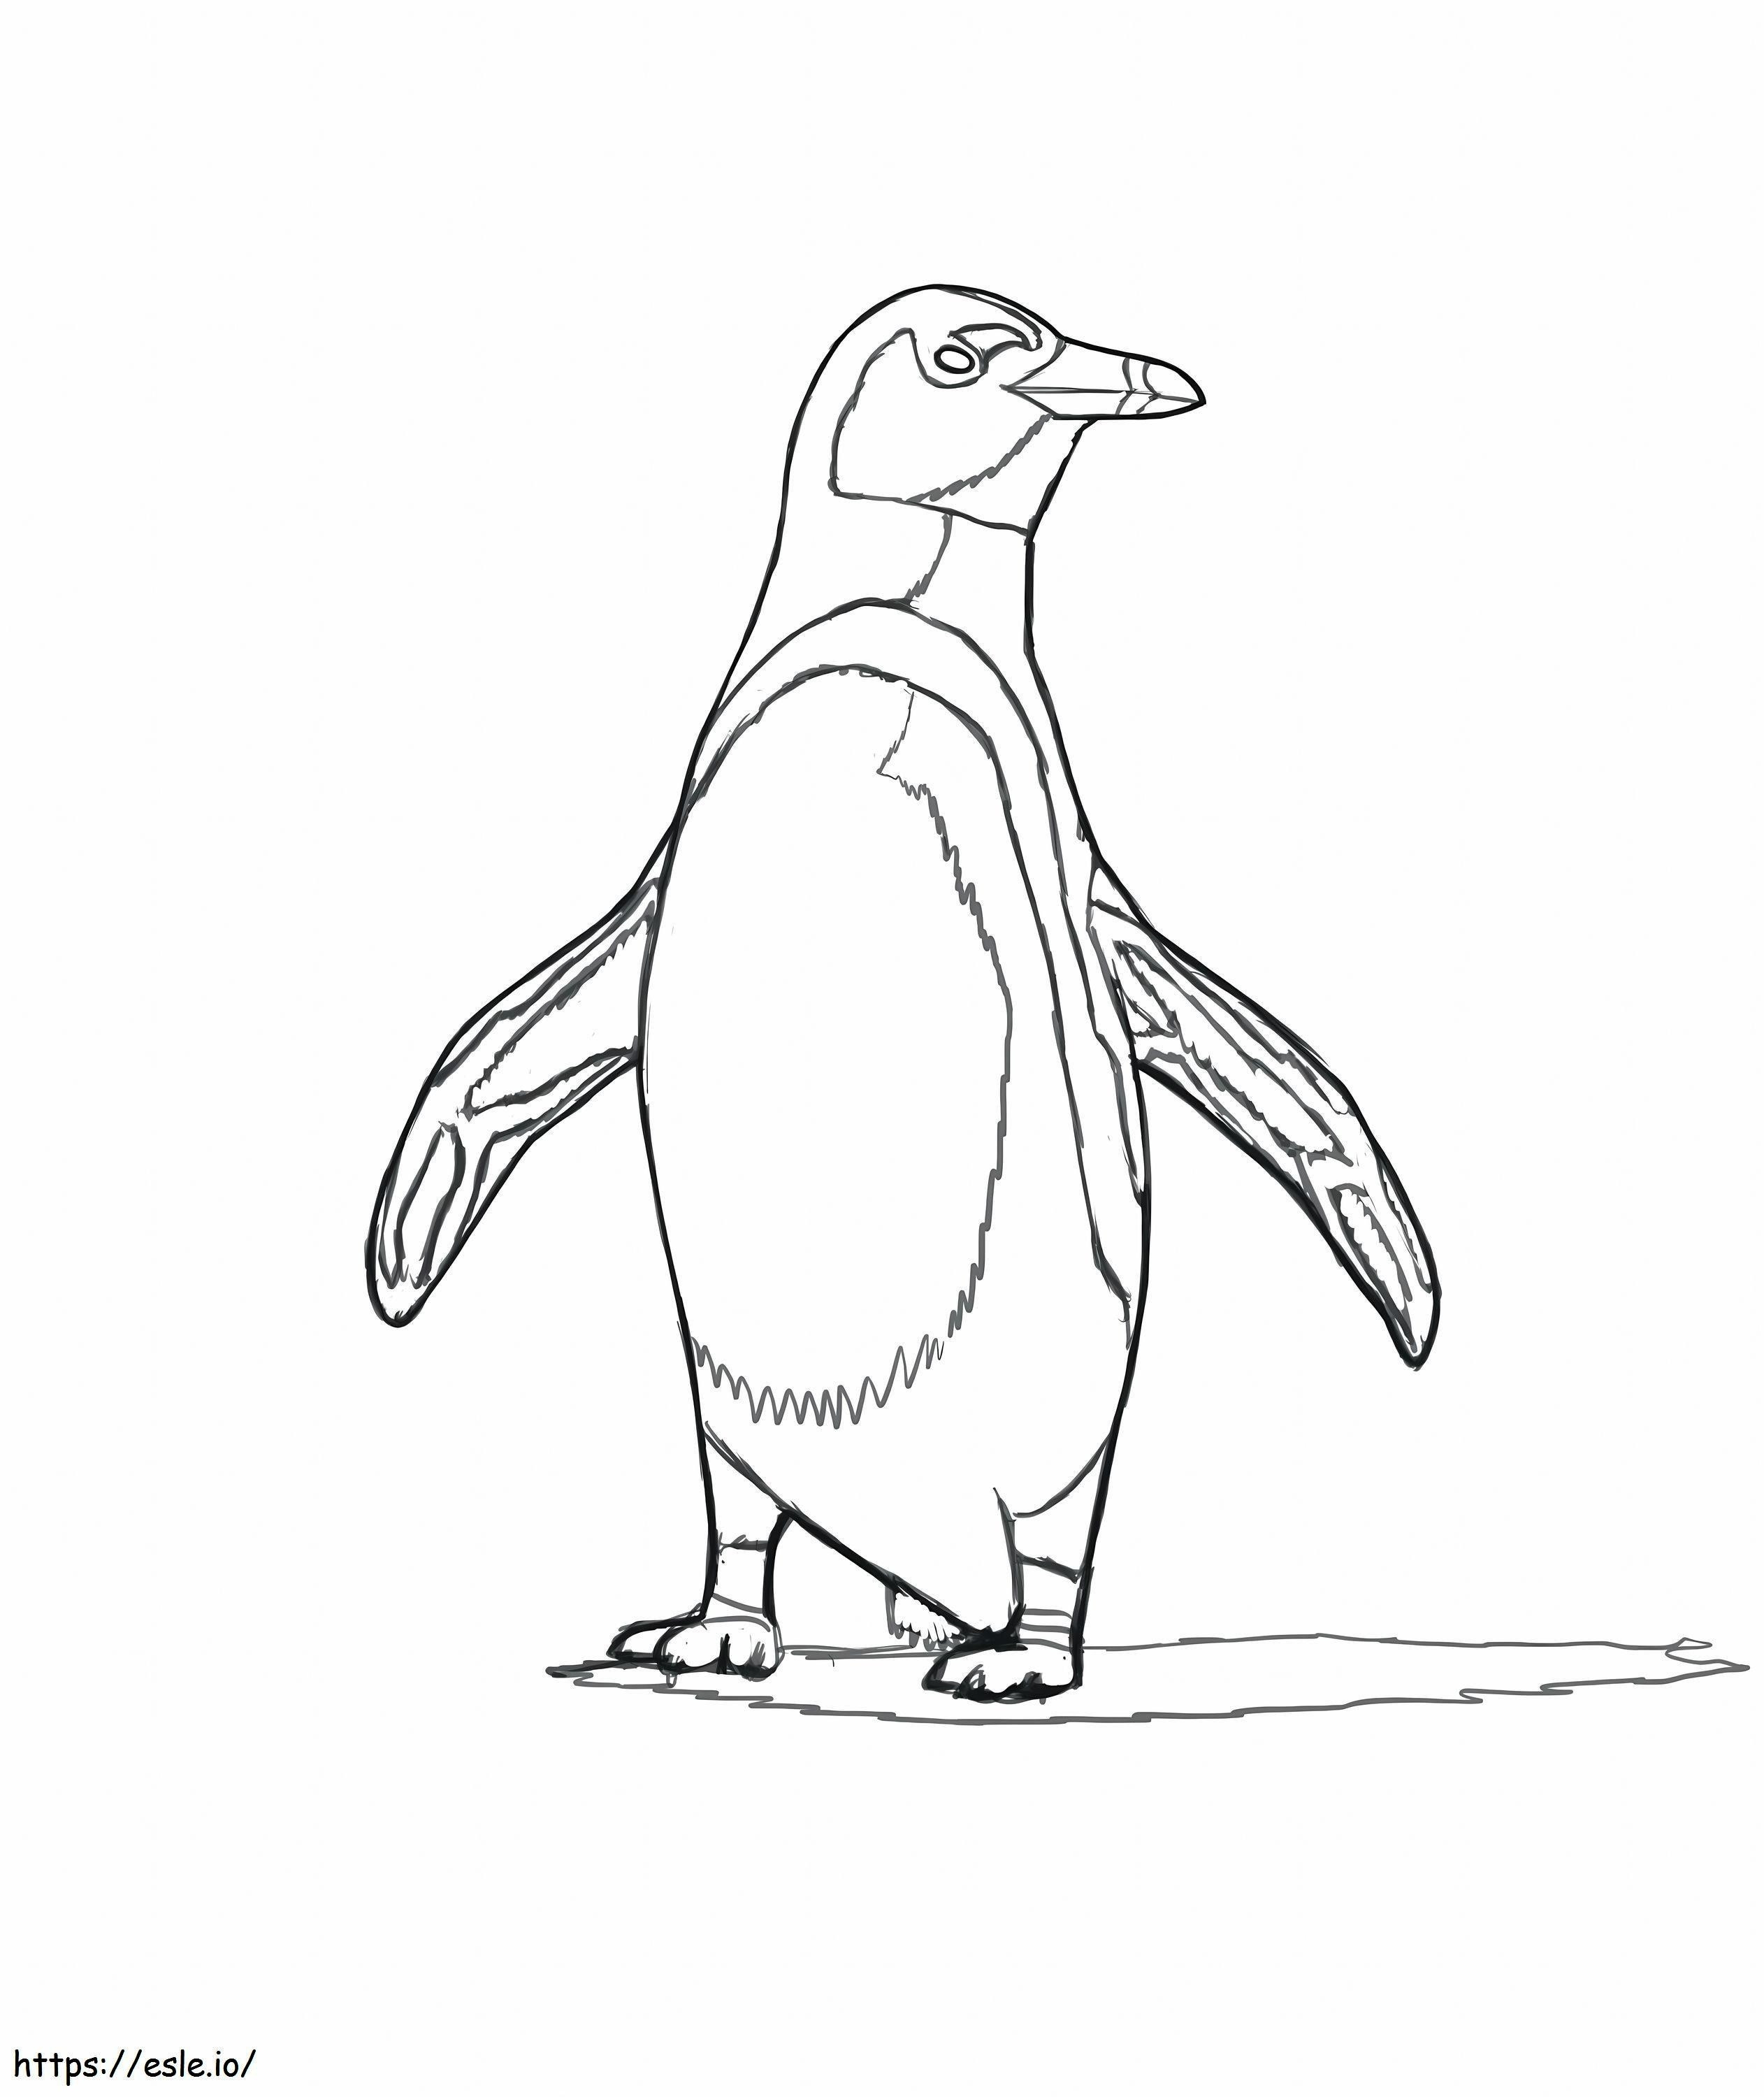 Pinguim Africano para colorir